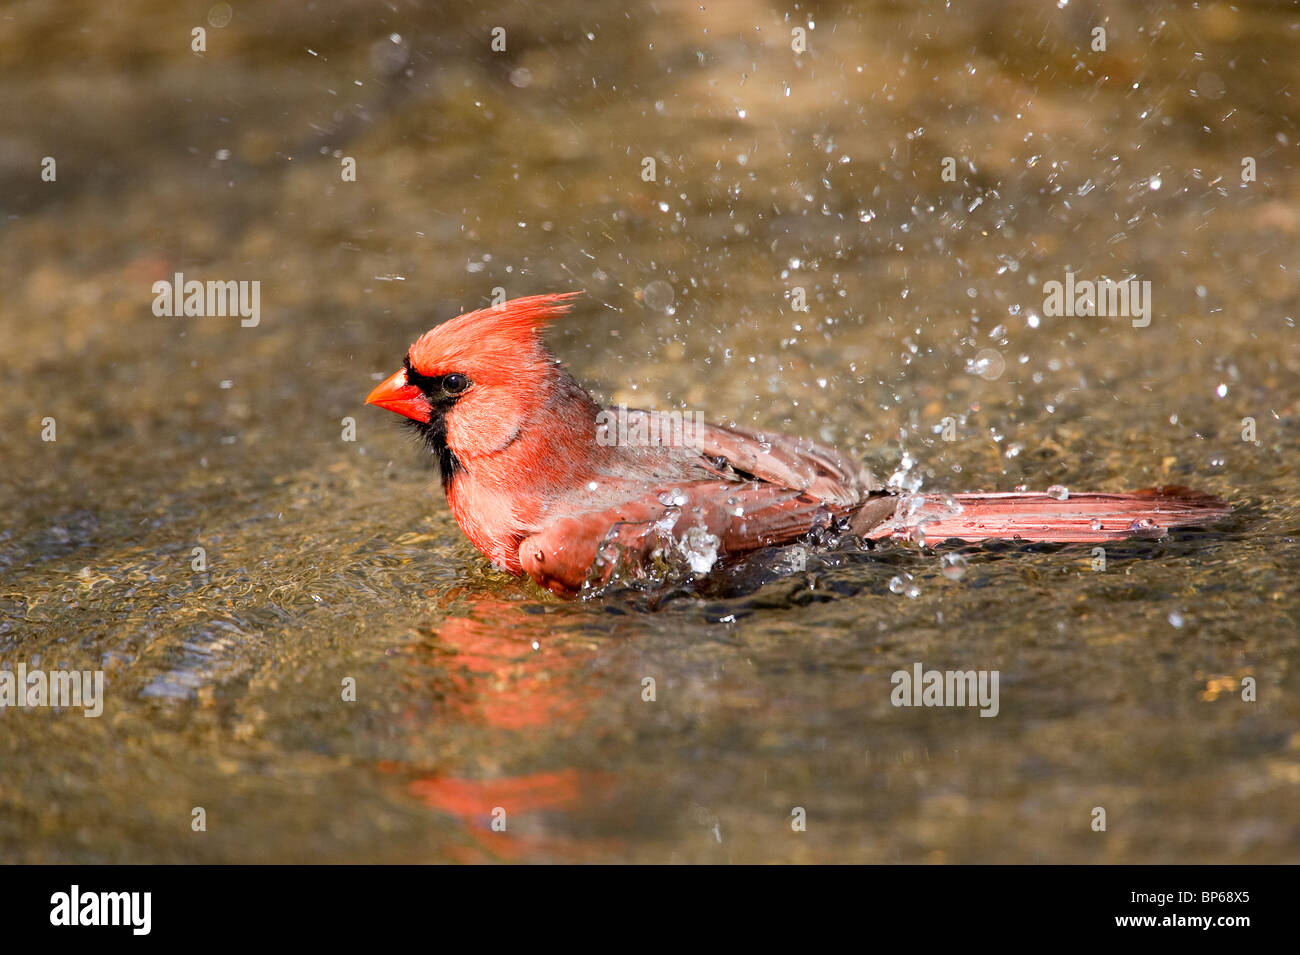 Adult Male Northern Cardinal Taking a Bath Stock Photo